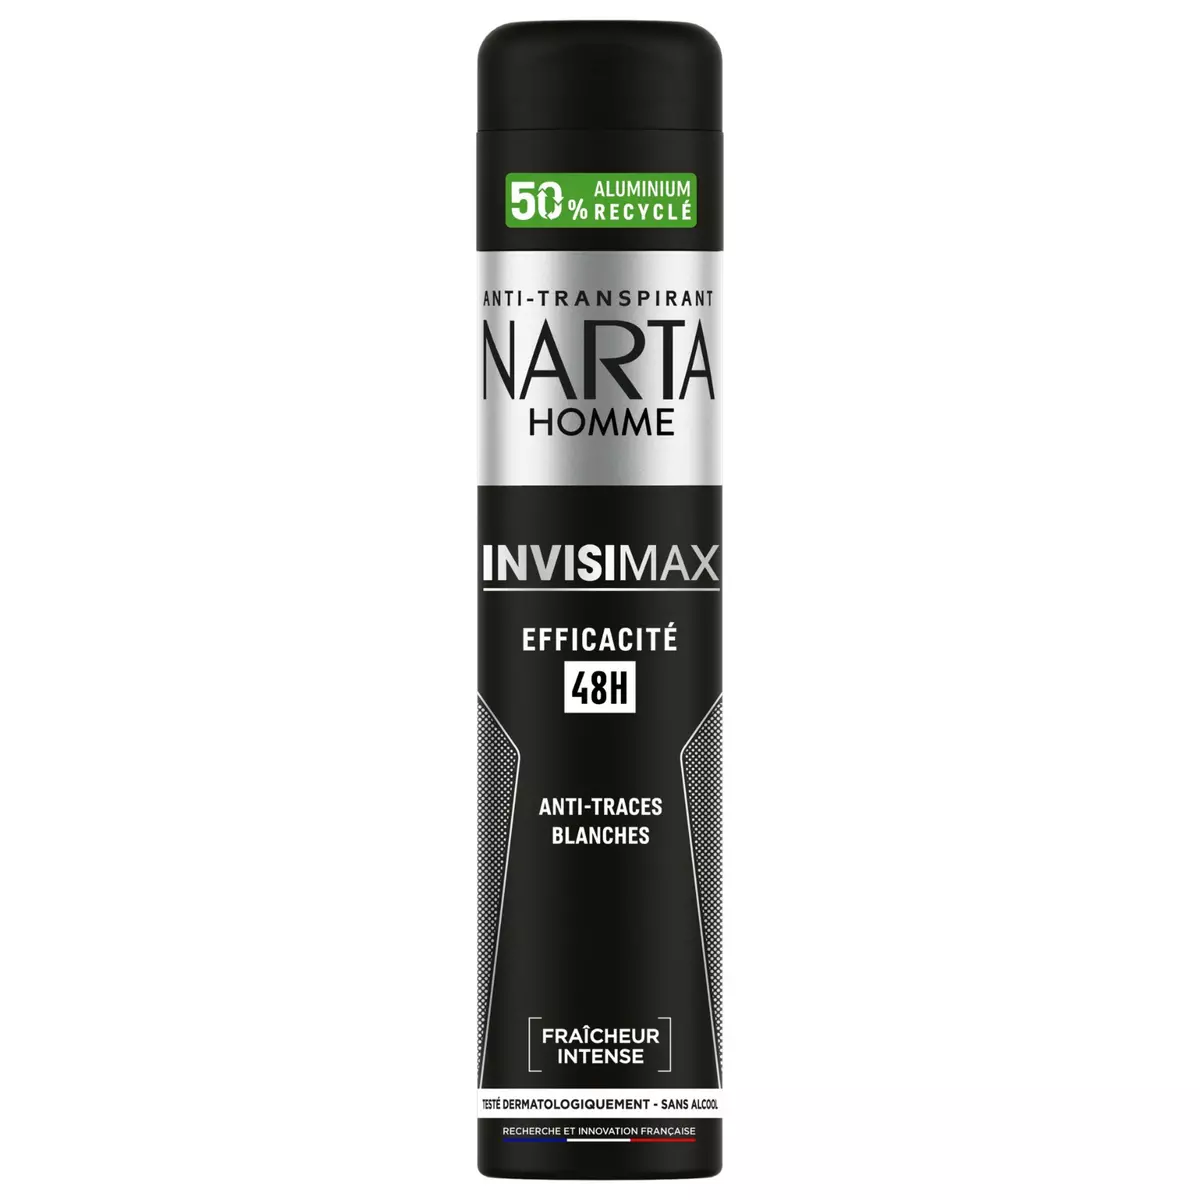 NARTA Homme déodorant anti-transpirant invisimax efficacité 48h fraicheur intense 200ml